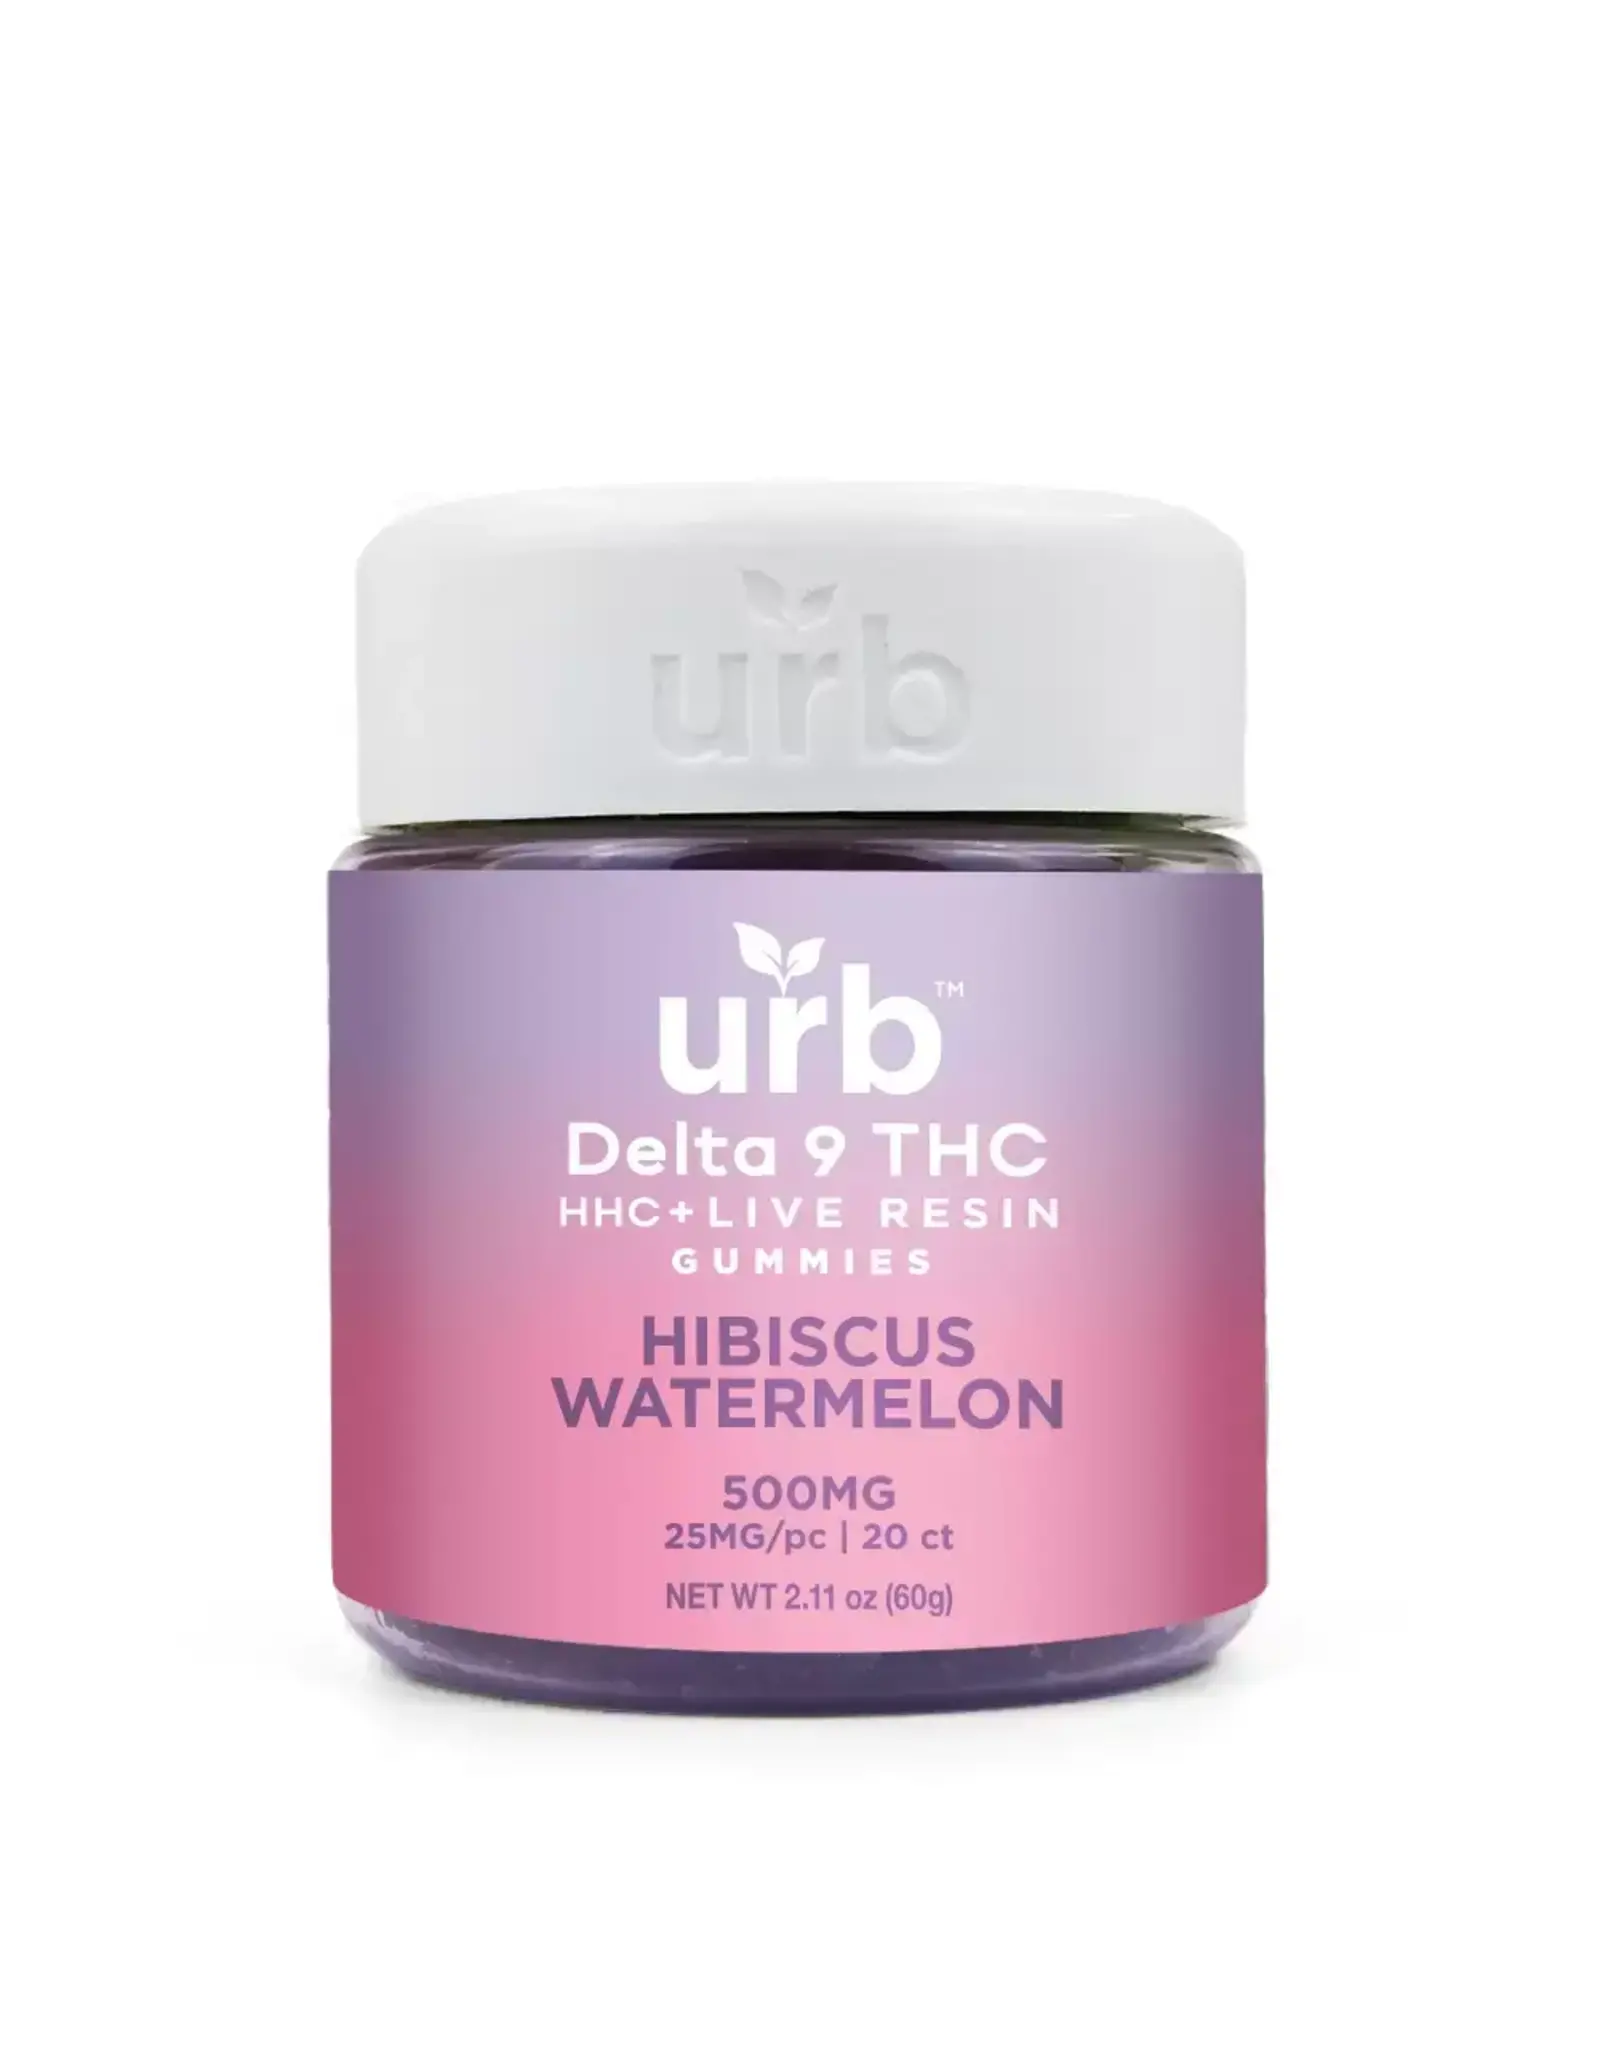 URB URB Delta 9 HHC Hibiscus Watermelon Gummies 25mg 20ct